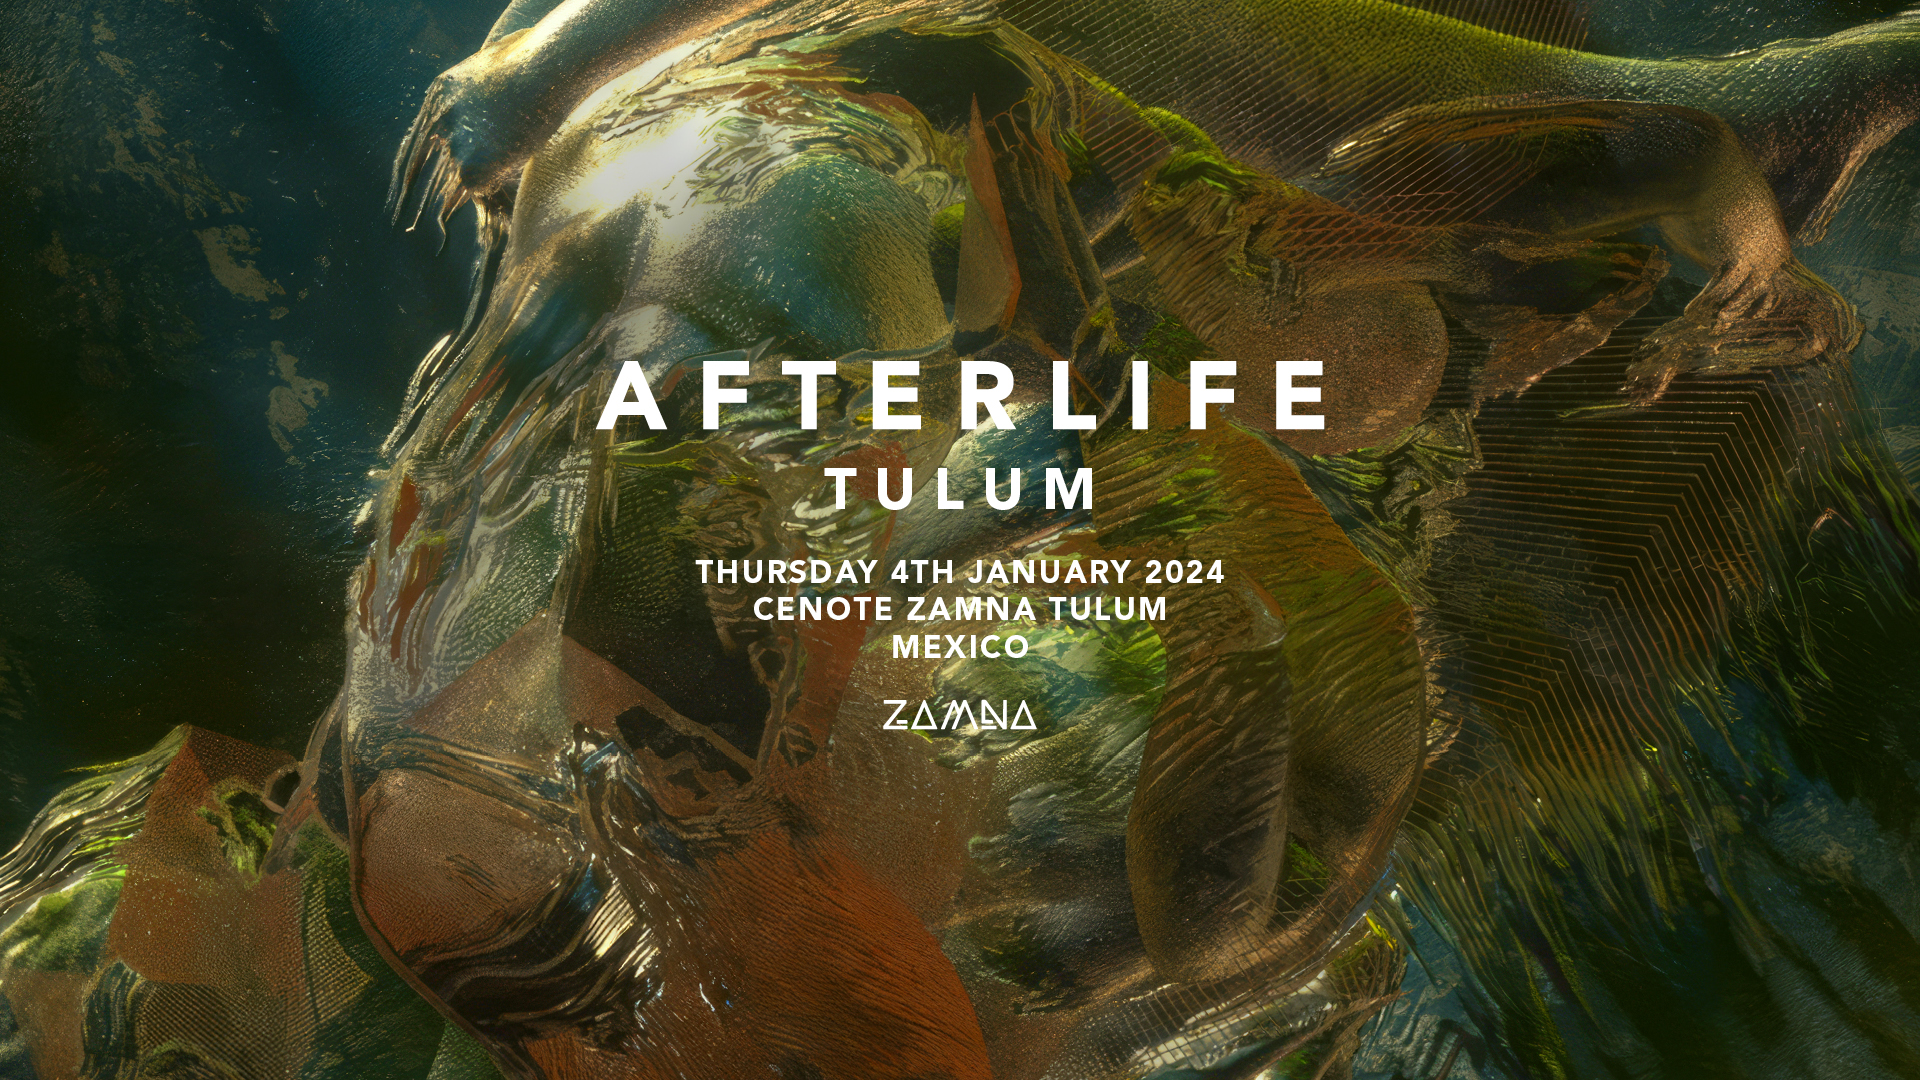 Afterlife Tulum 2020